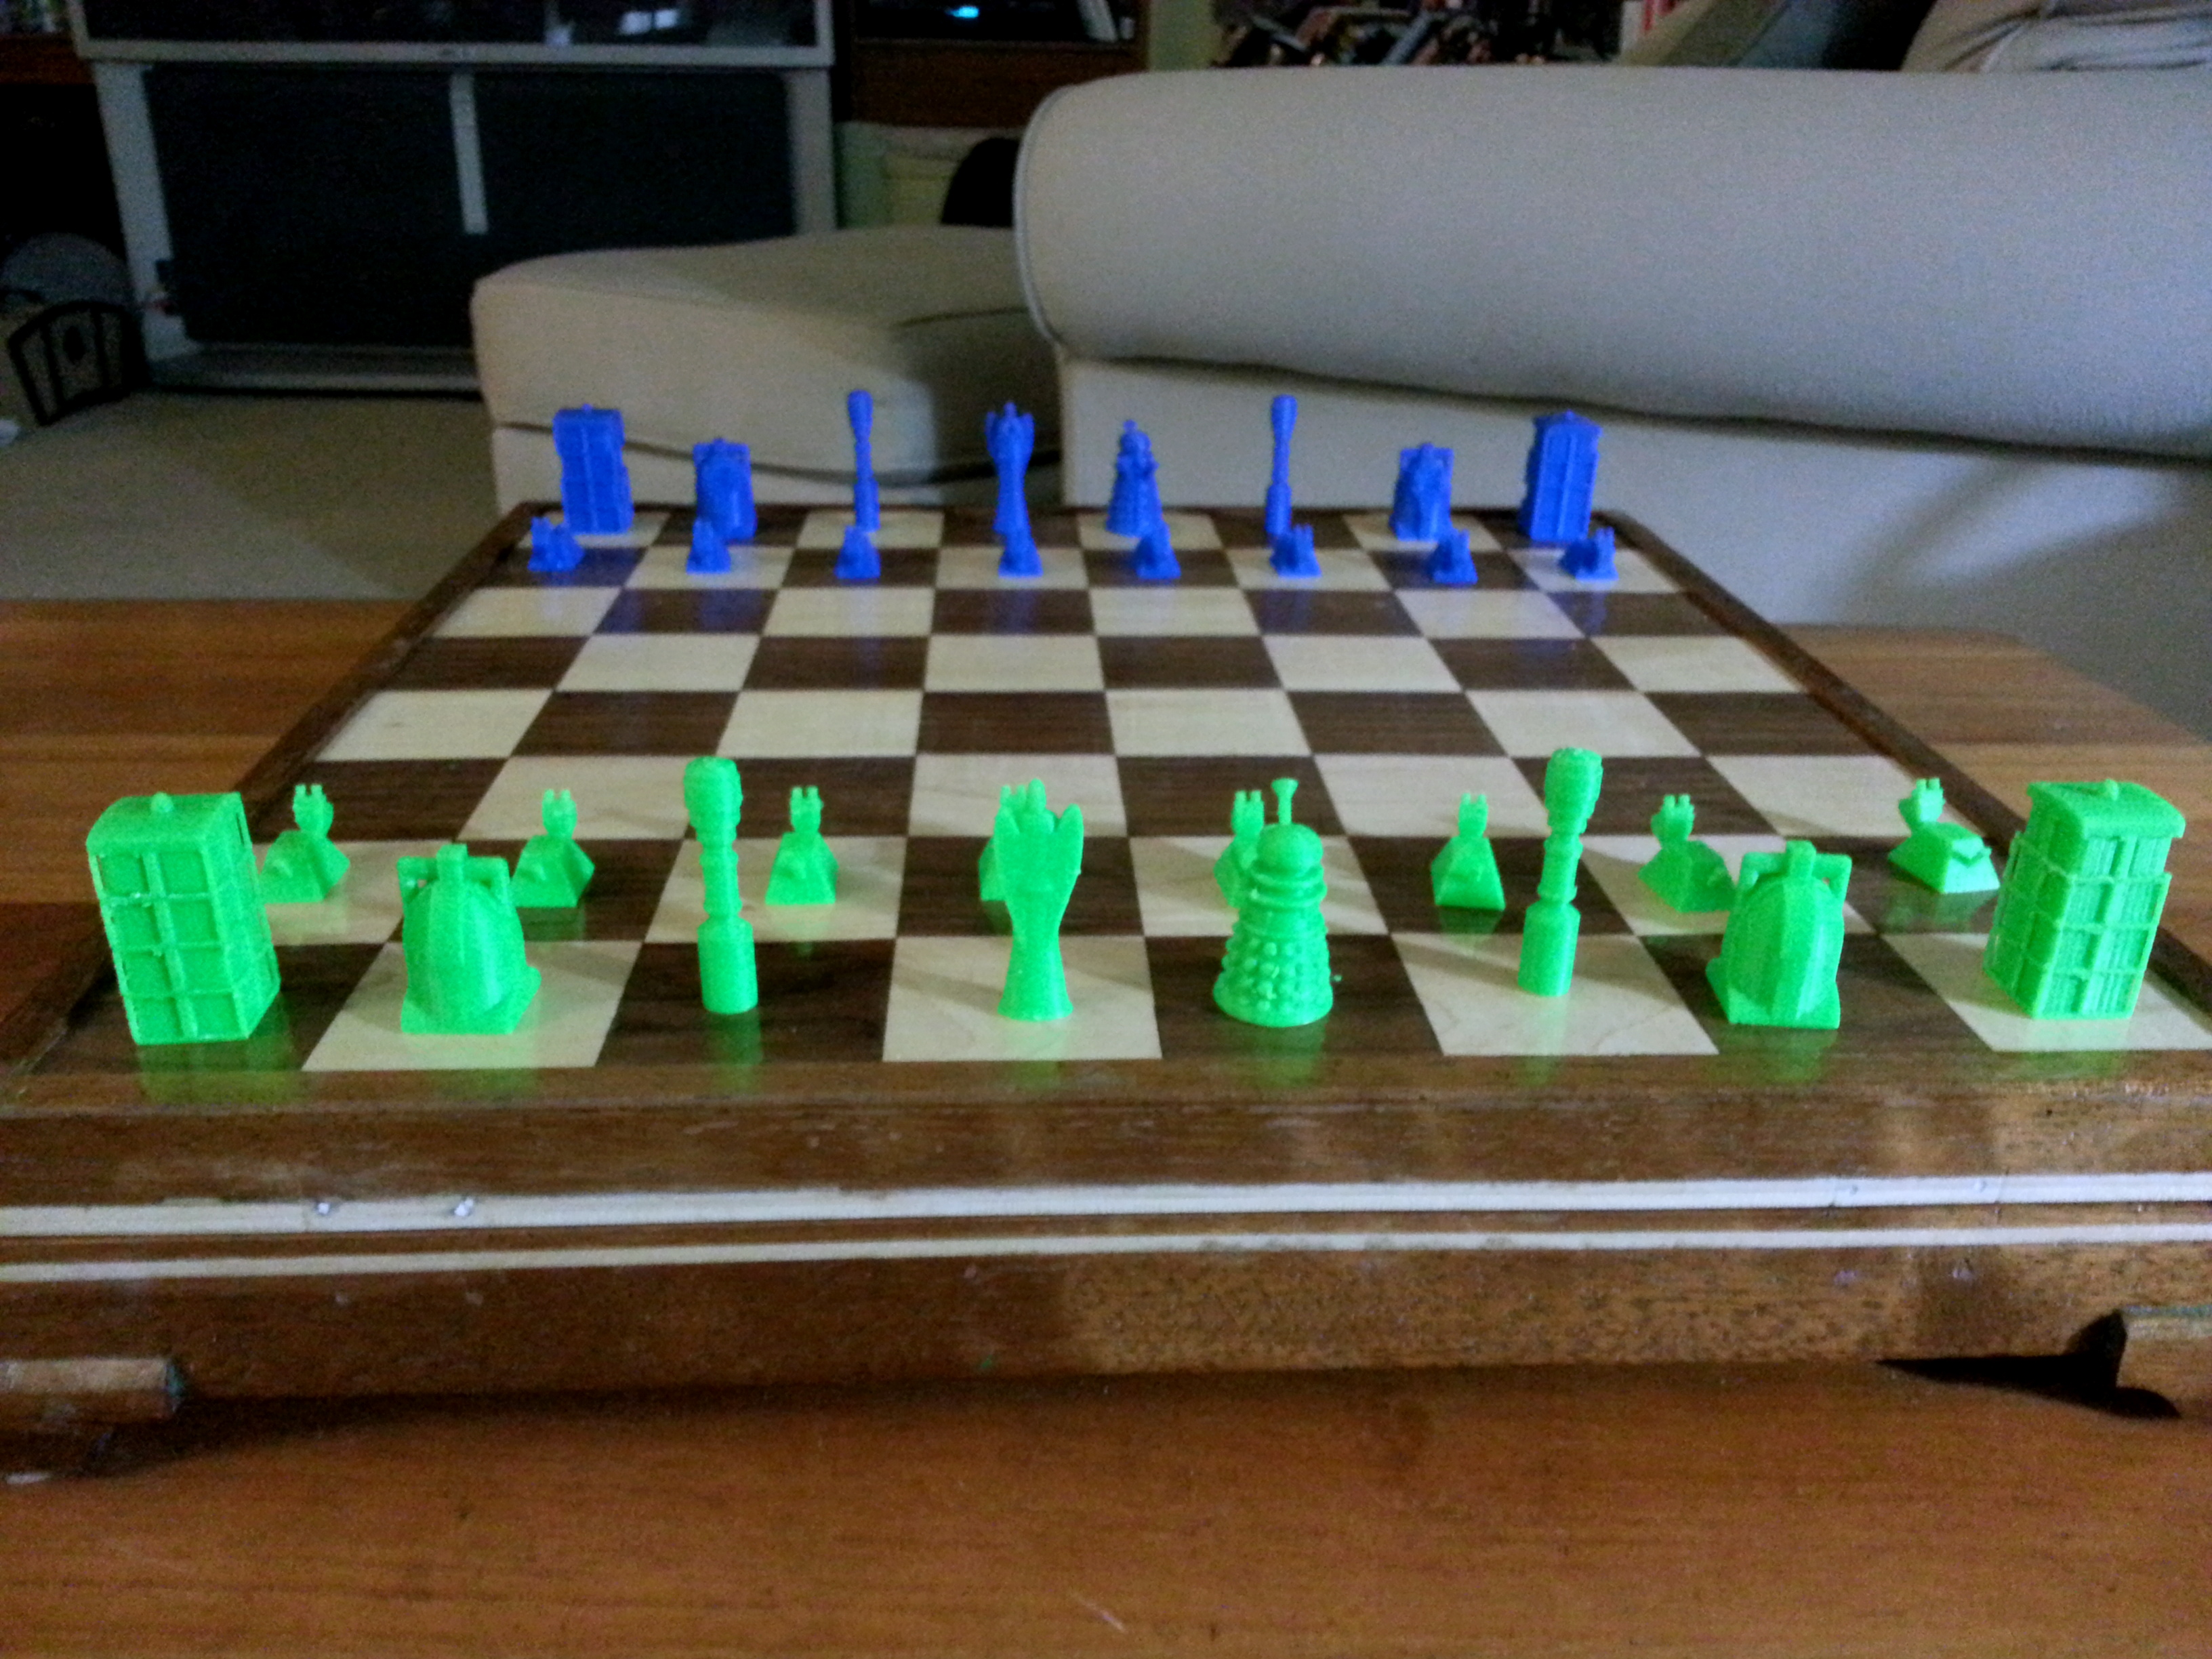 Finished chess set